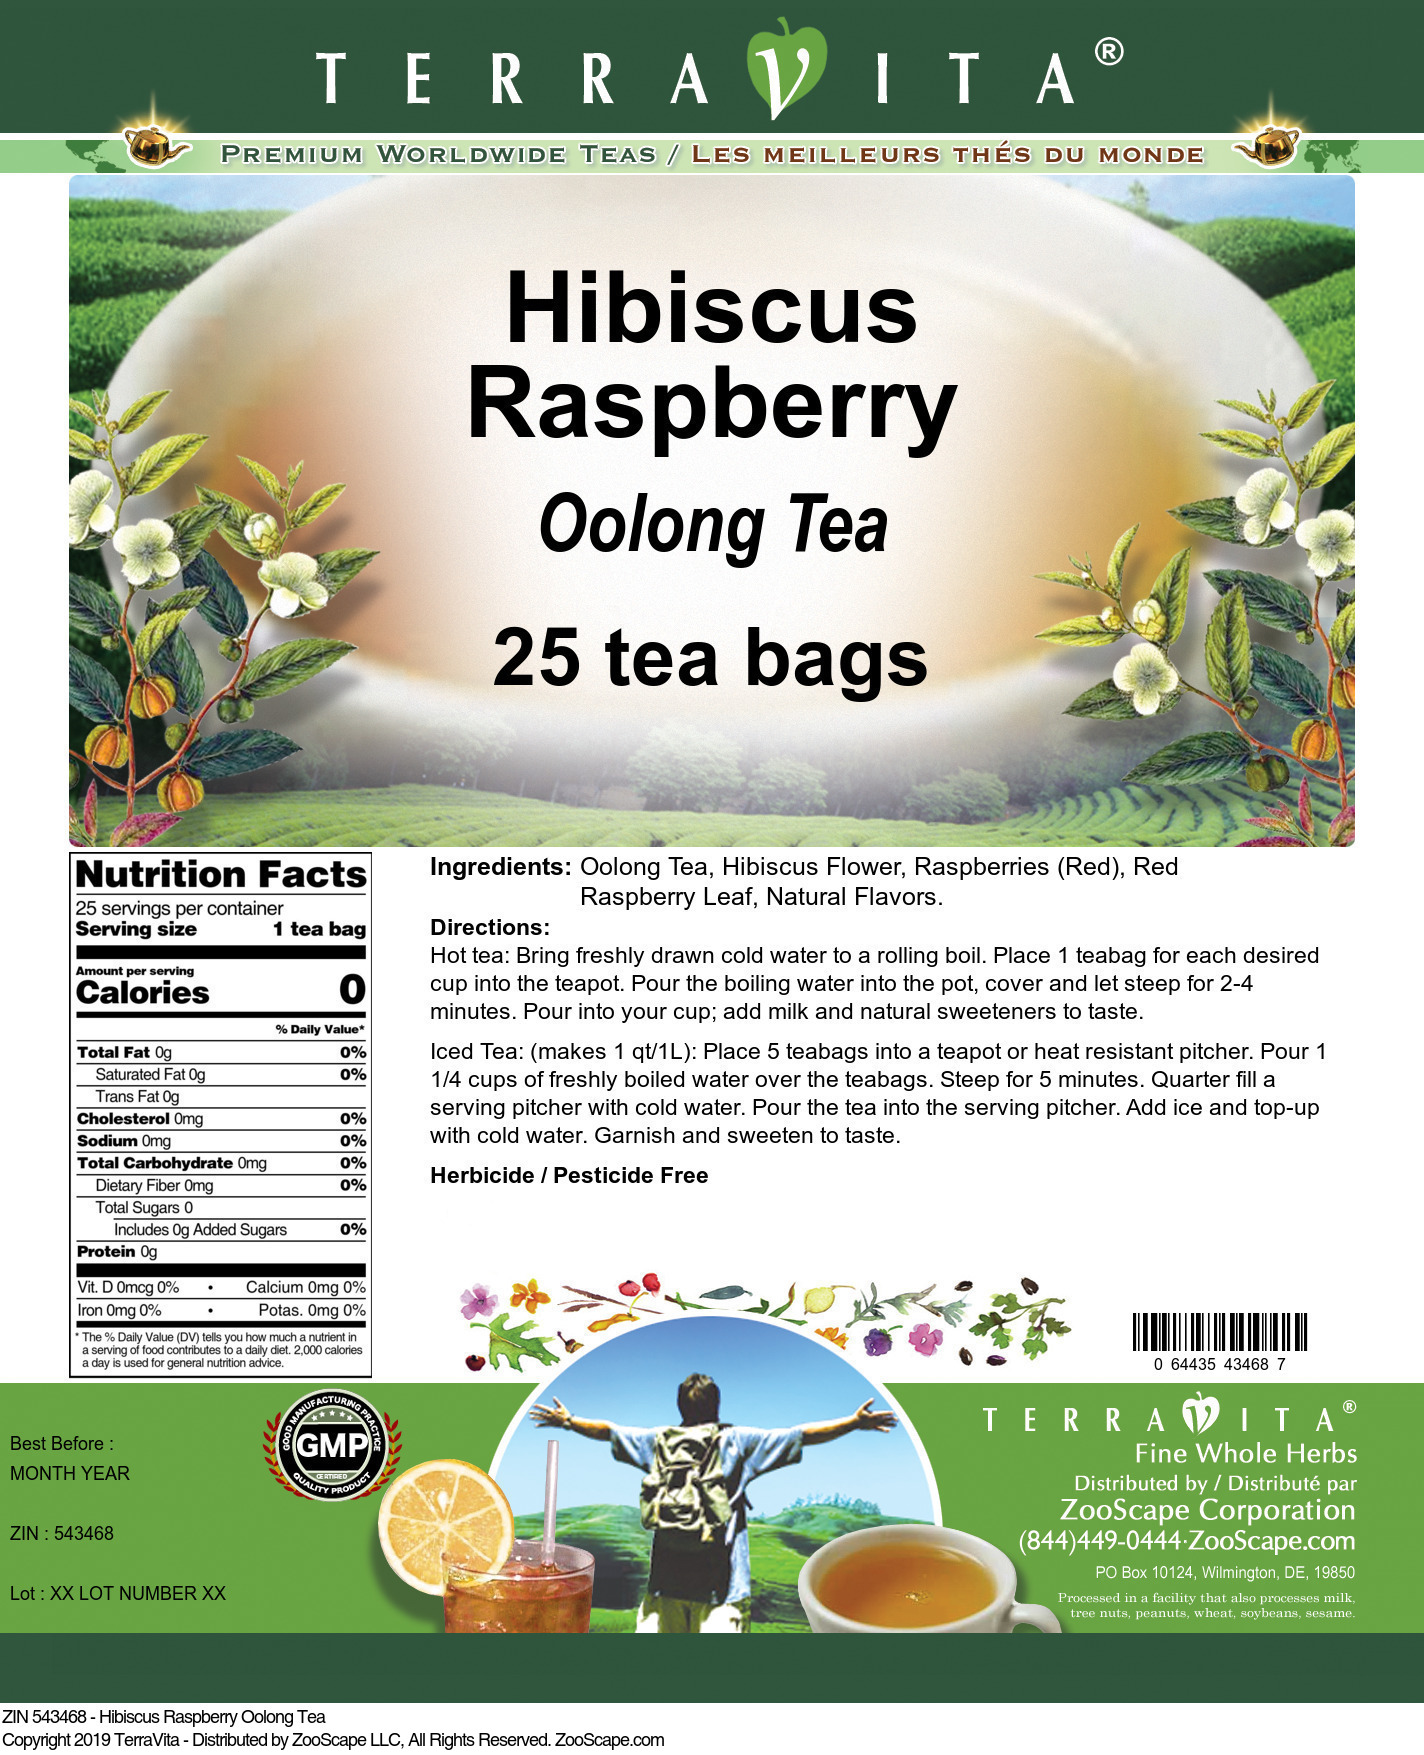 Hibiscus Raspberry Oolong Tea - Label